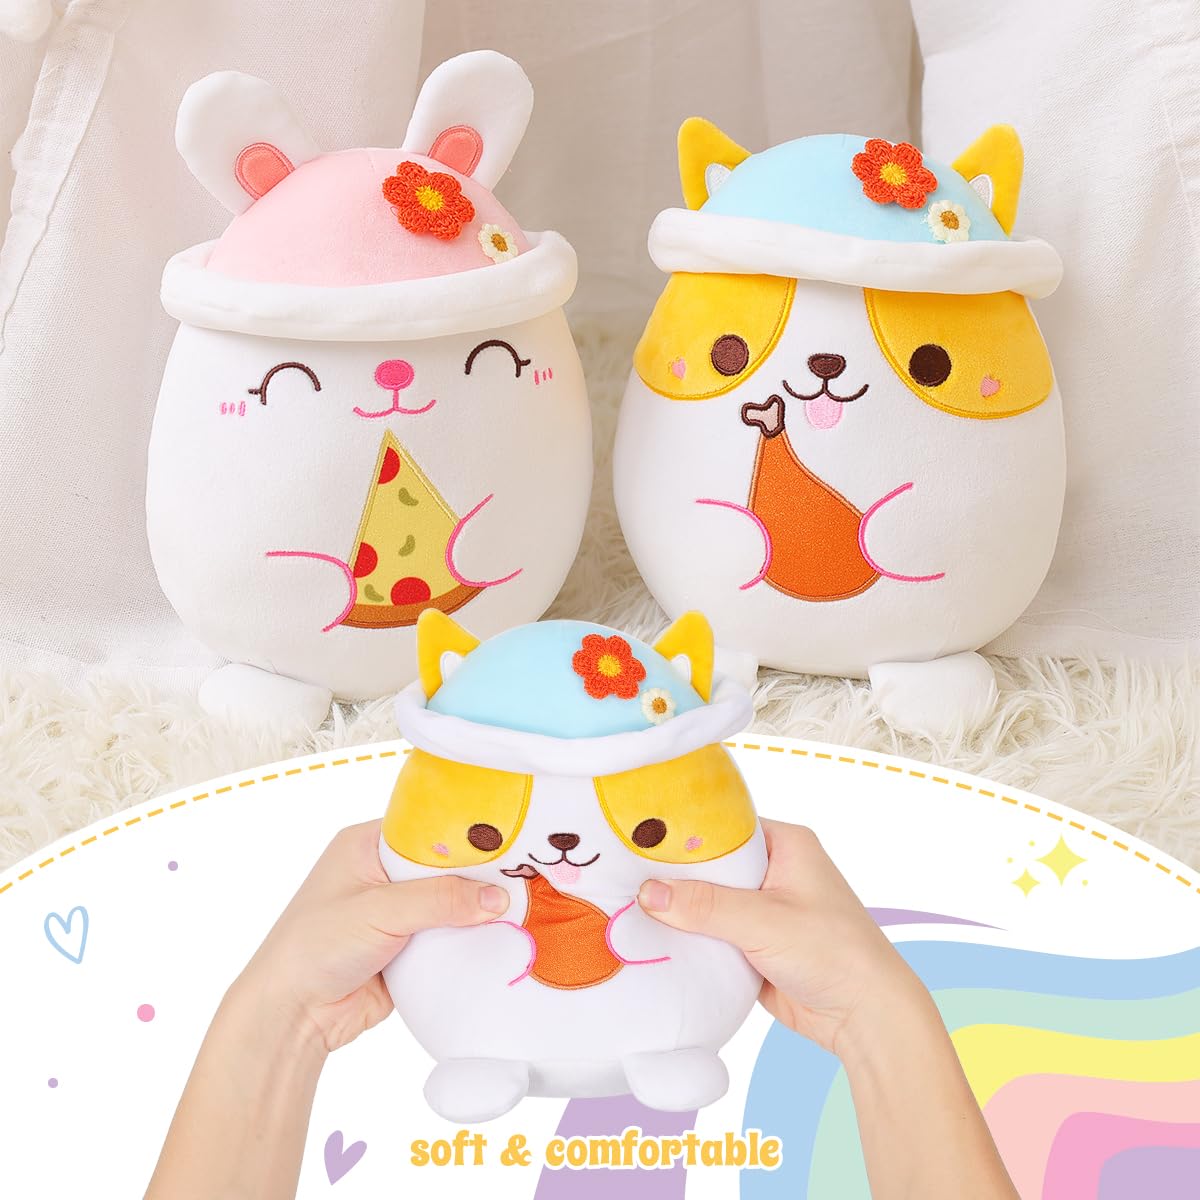 20 CM / 8 inch Cute corgi plush pillow dog stuffed animal, soft kawaii corgi plush toy, hooded clothing, suitable gift for children